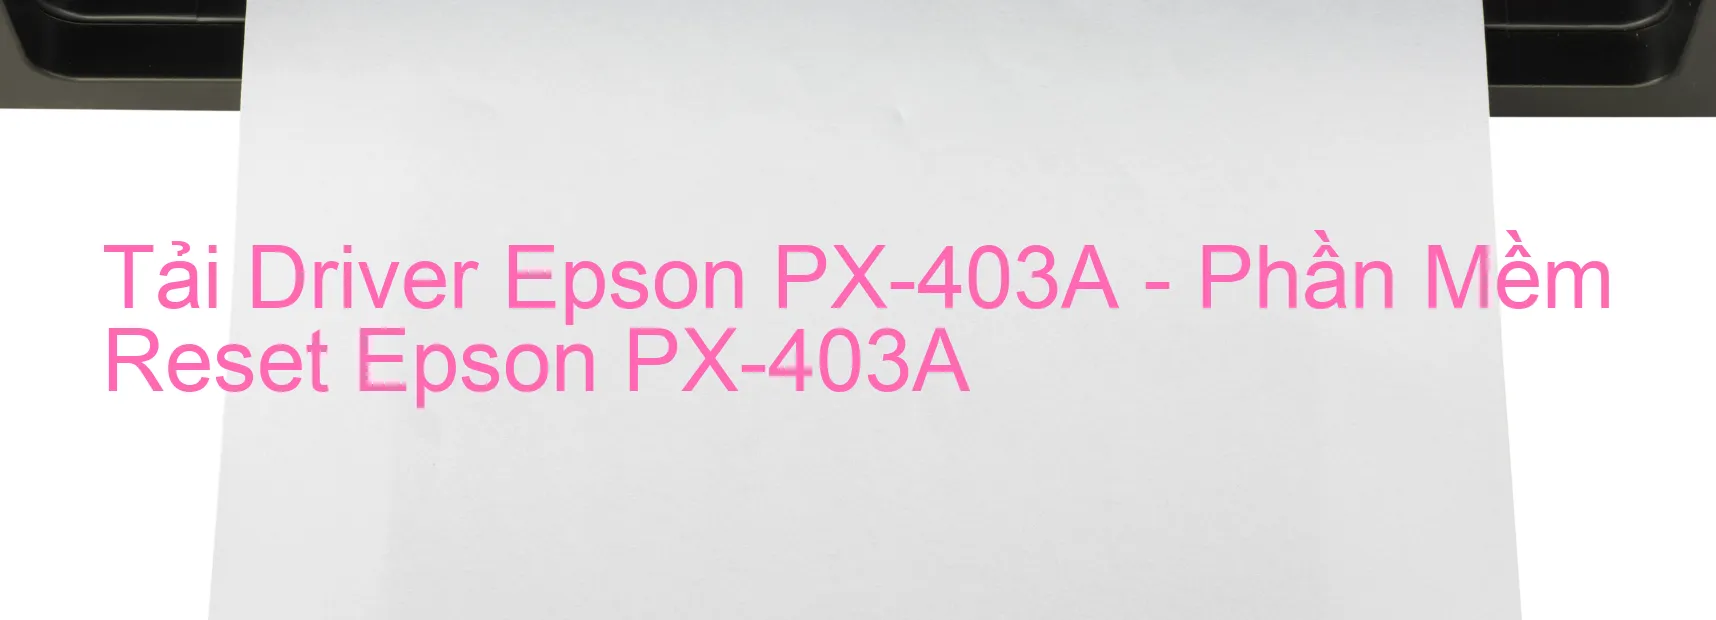 Driver Epson PX-403A, Phần Mềm Reset Epson PX-403A